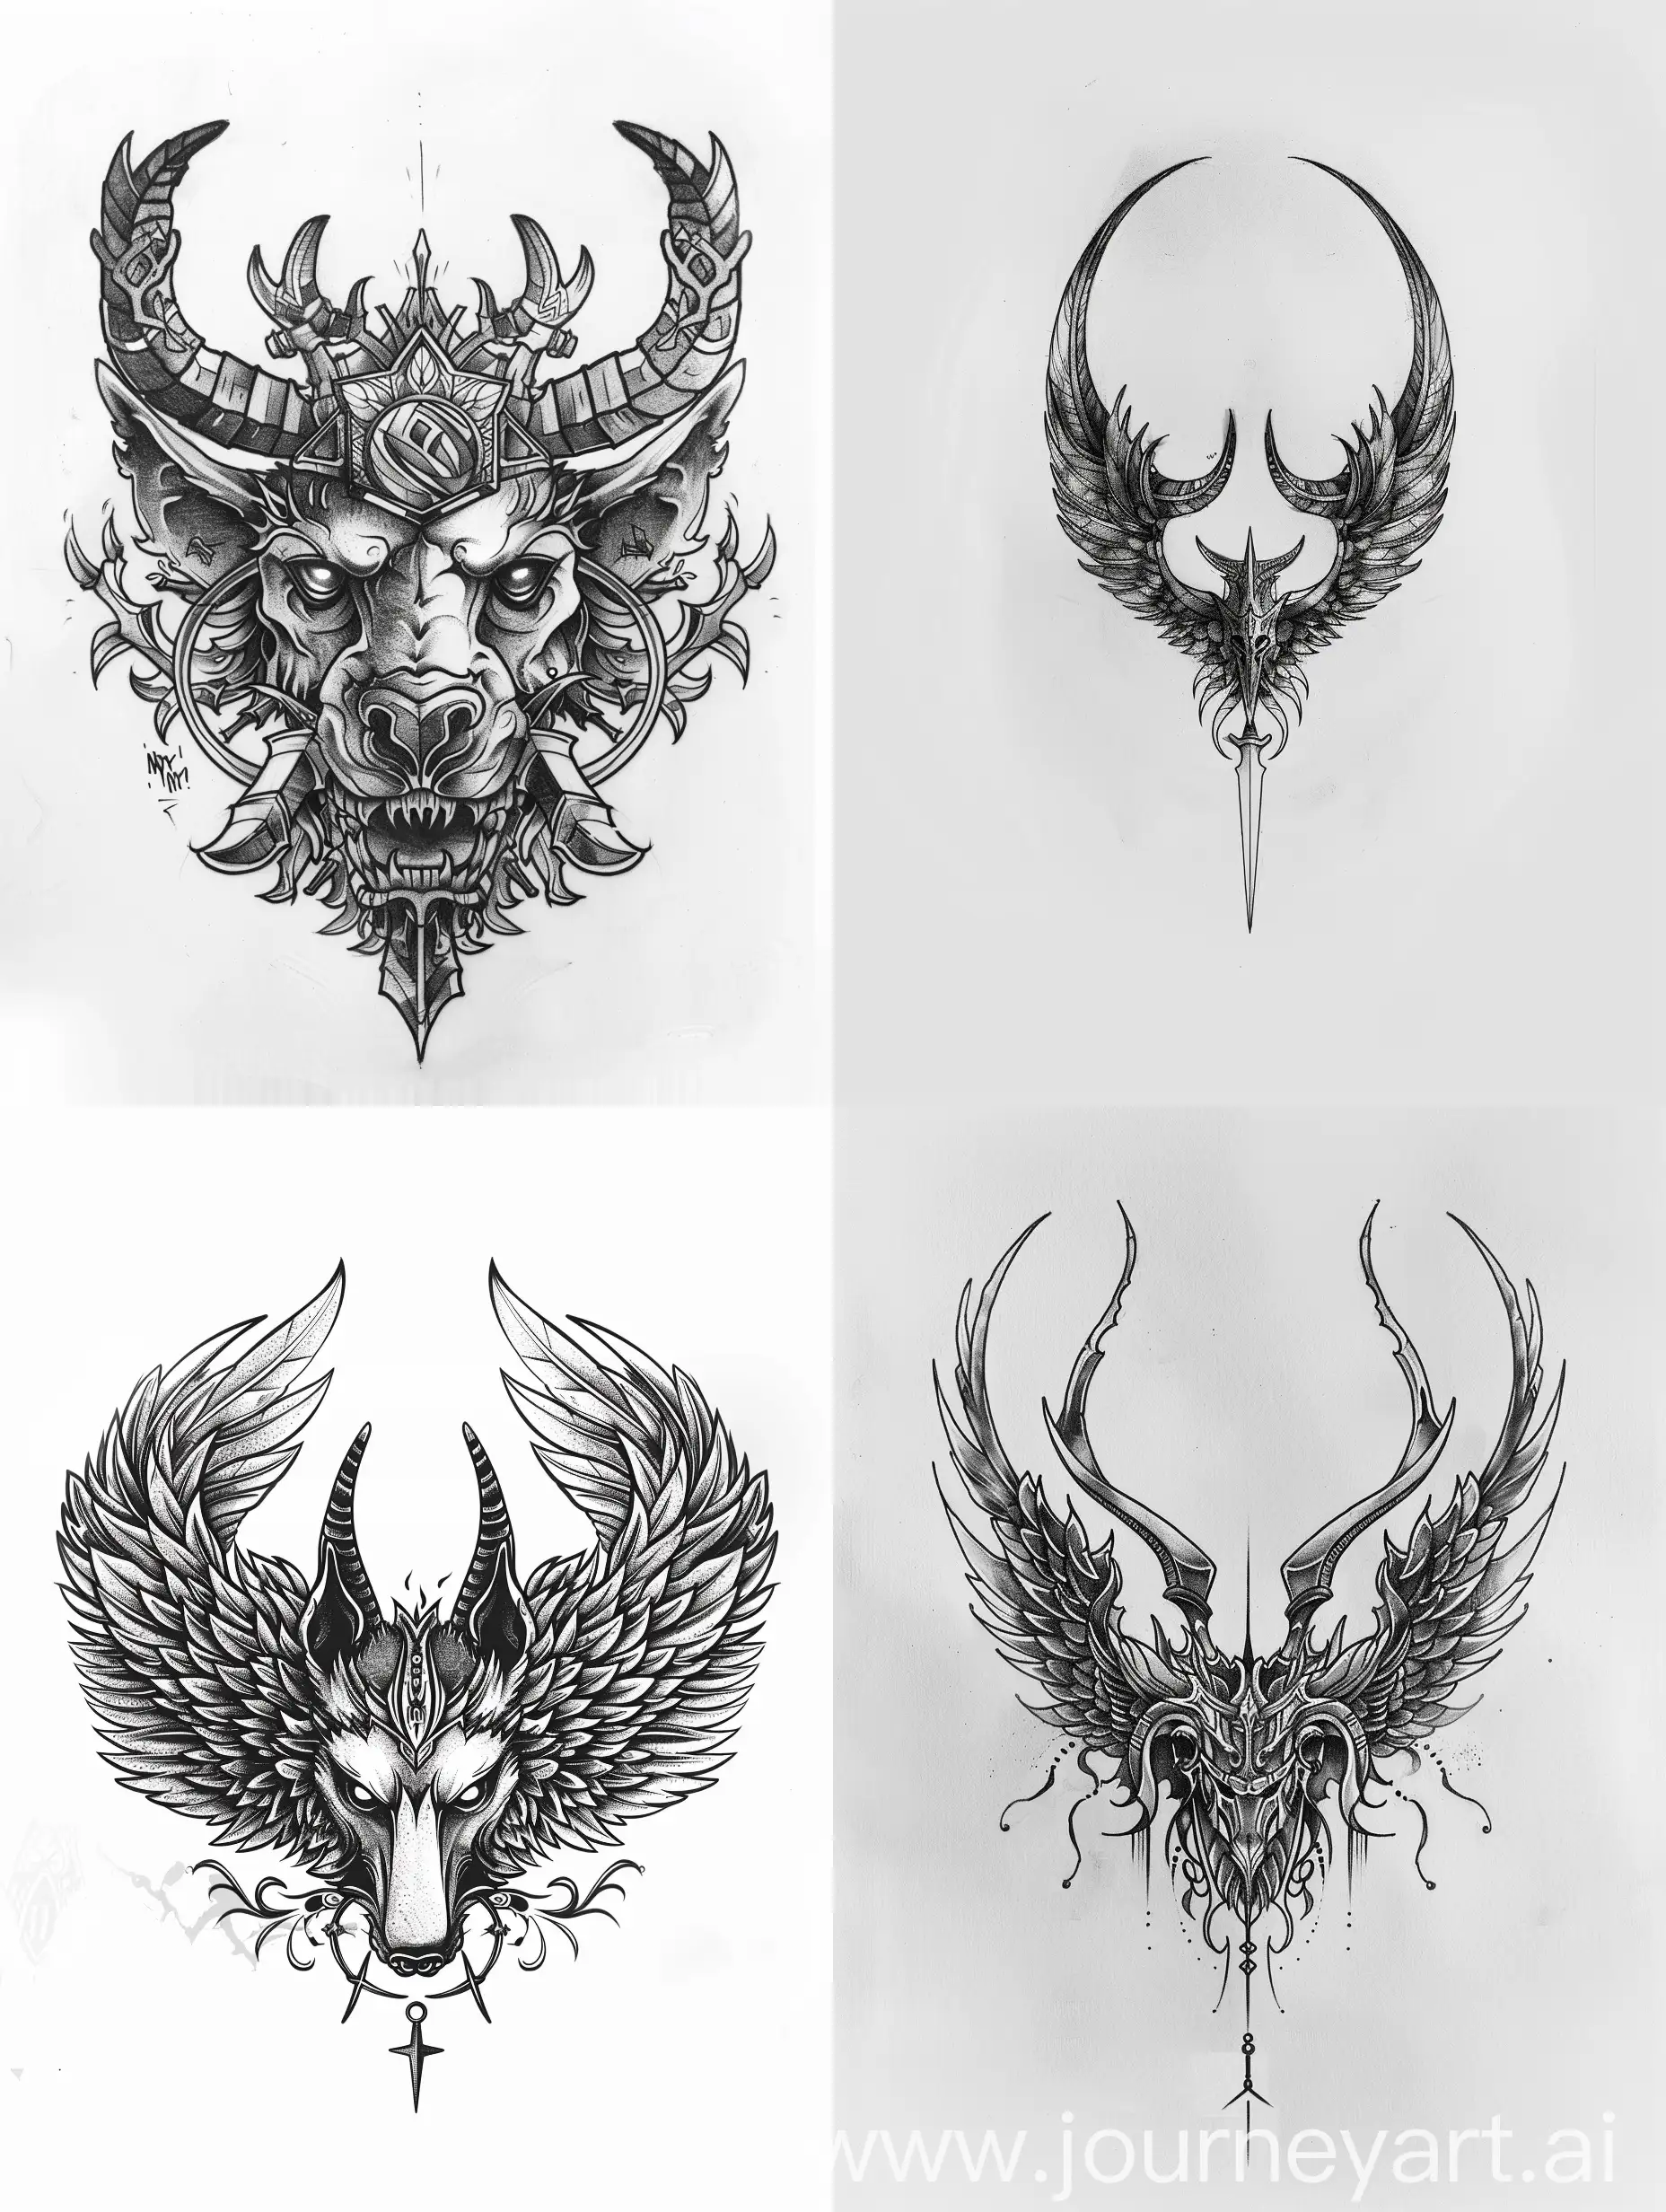 Symmetrical-Greek-Mythology-Nyx-Tattoo-Design-Sketch-on-White-Background